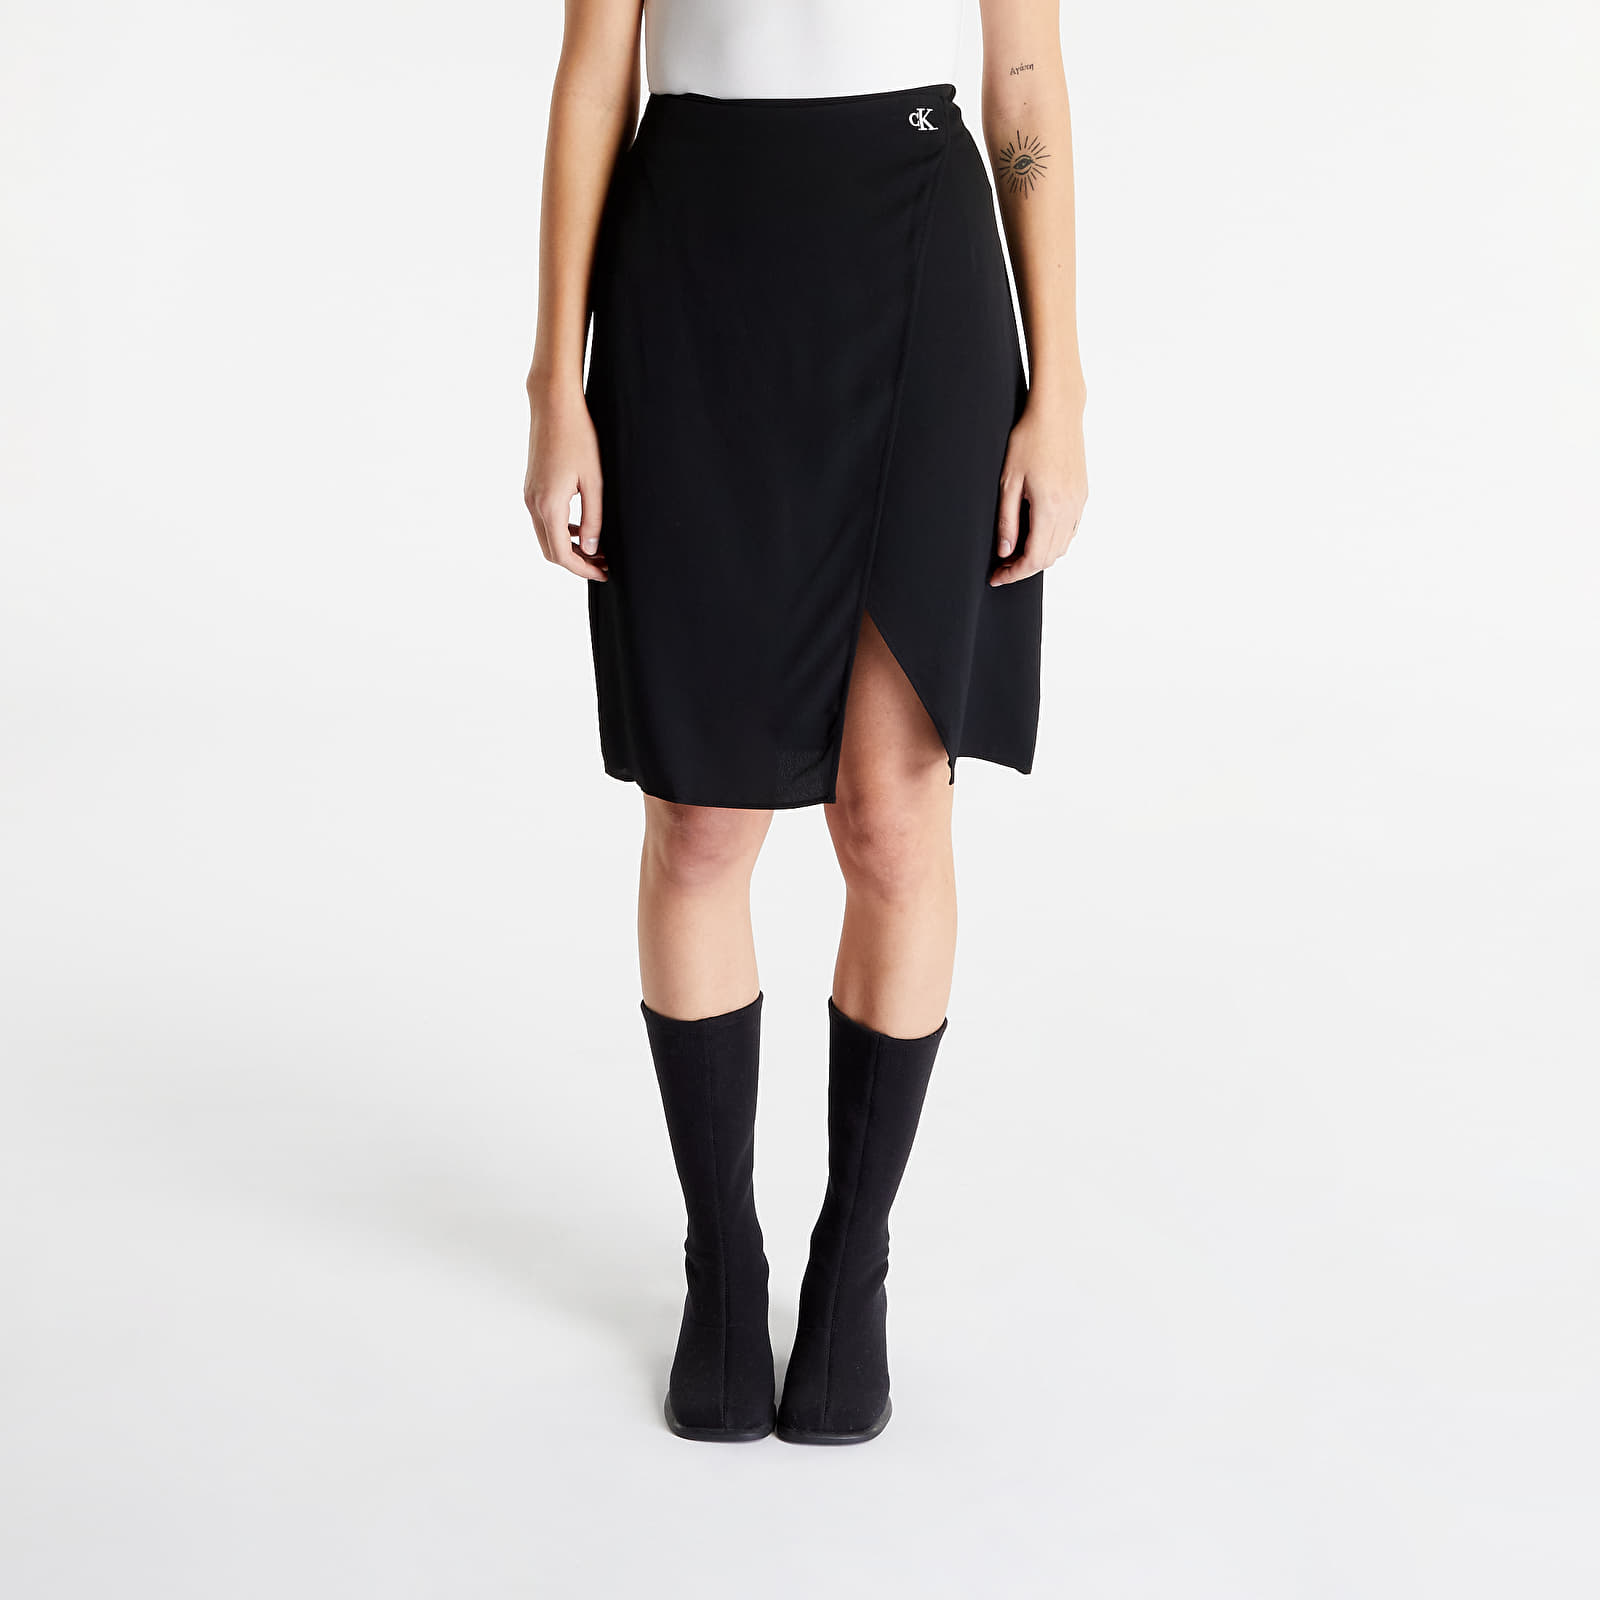 JEANS Black Tie Skirts CALVIN Midi | KLEIN Queens Detail Skirt